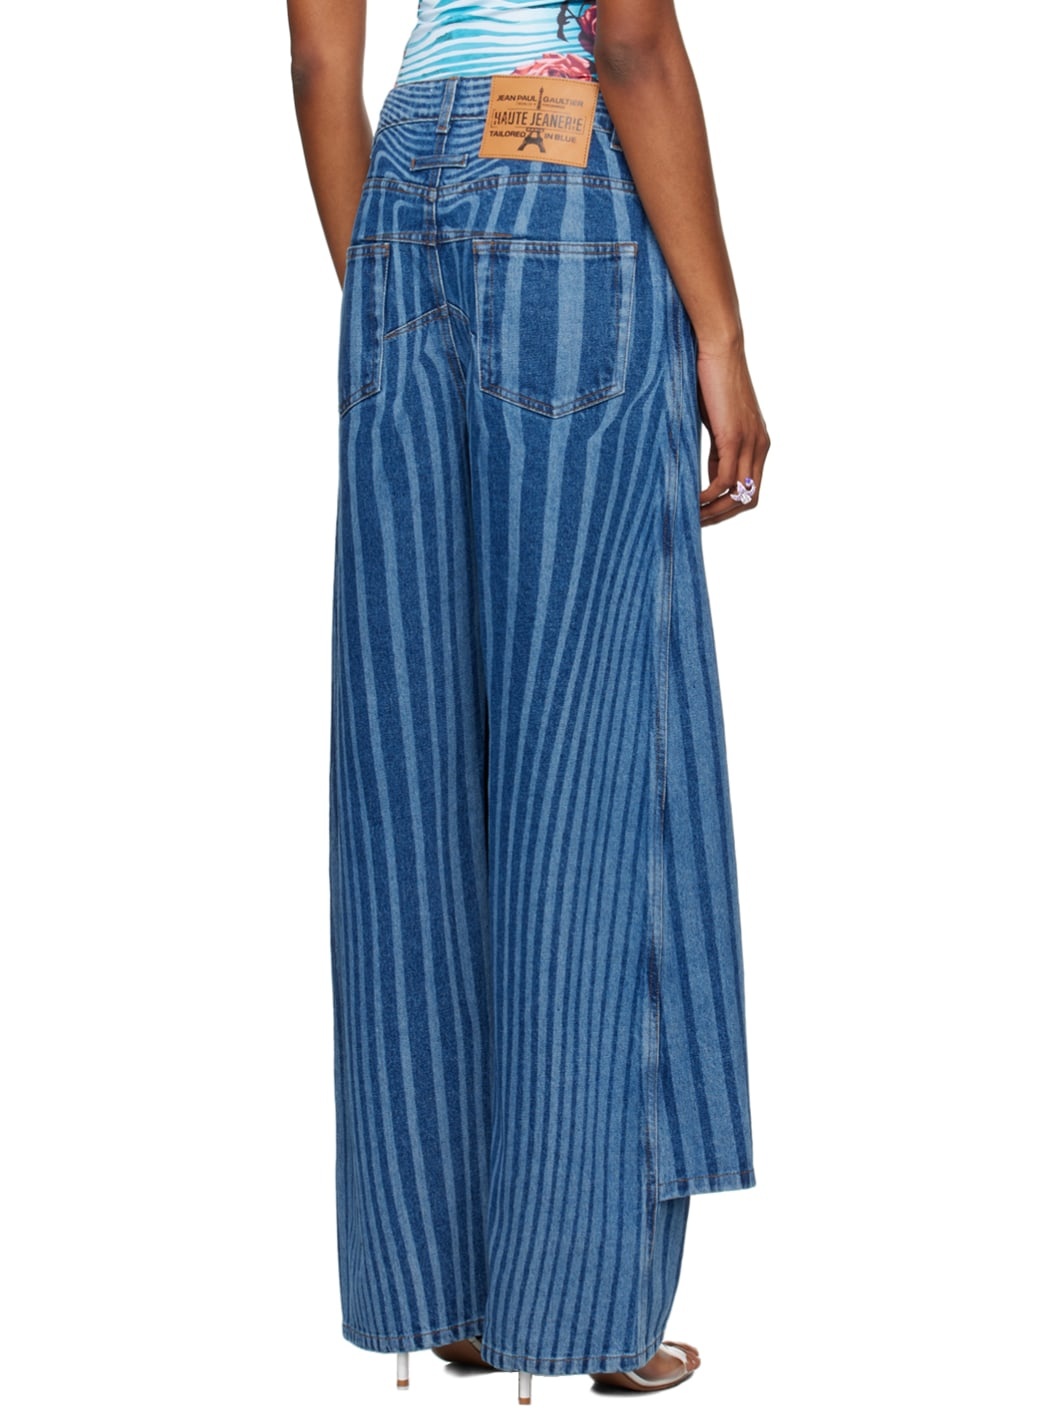 Blue 'The Denim Pant Skirt' Jeans - 3